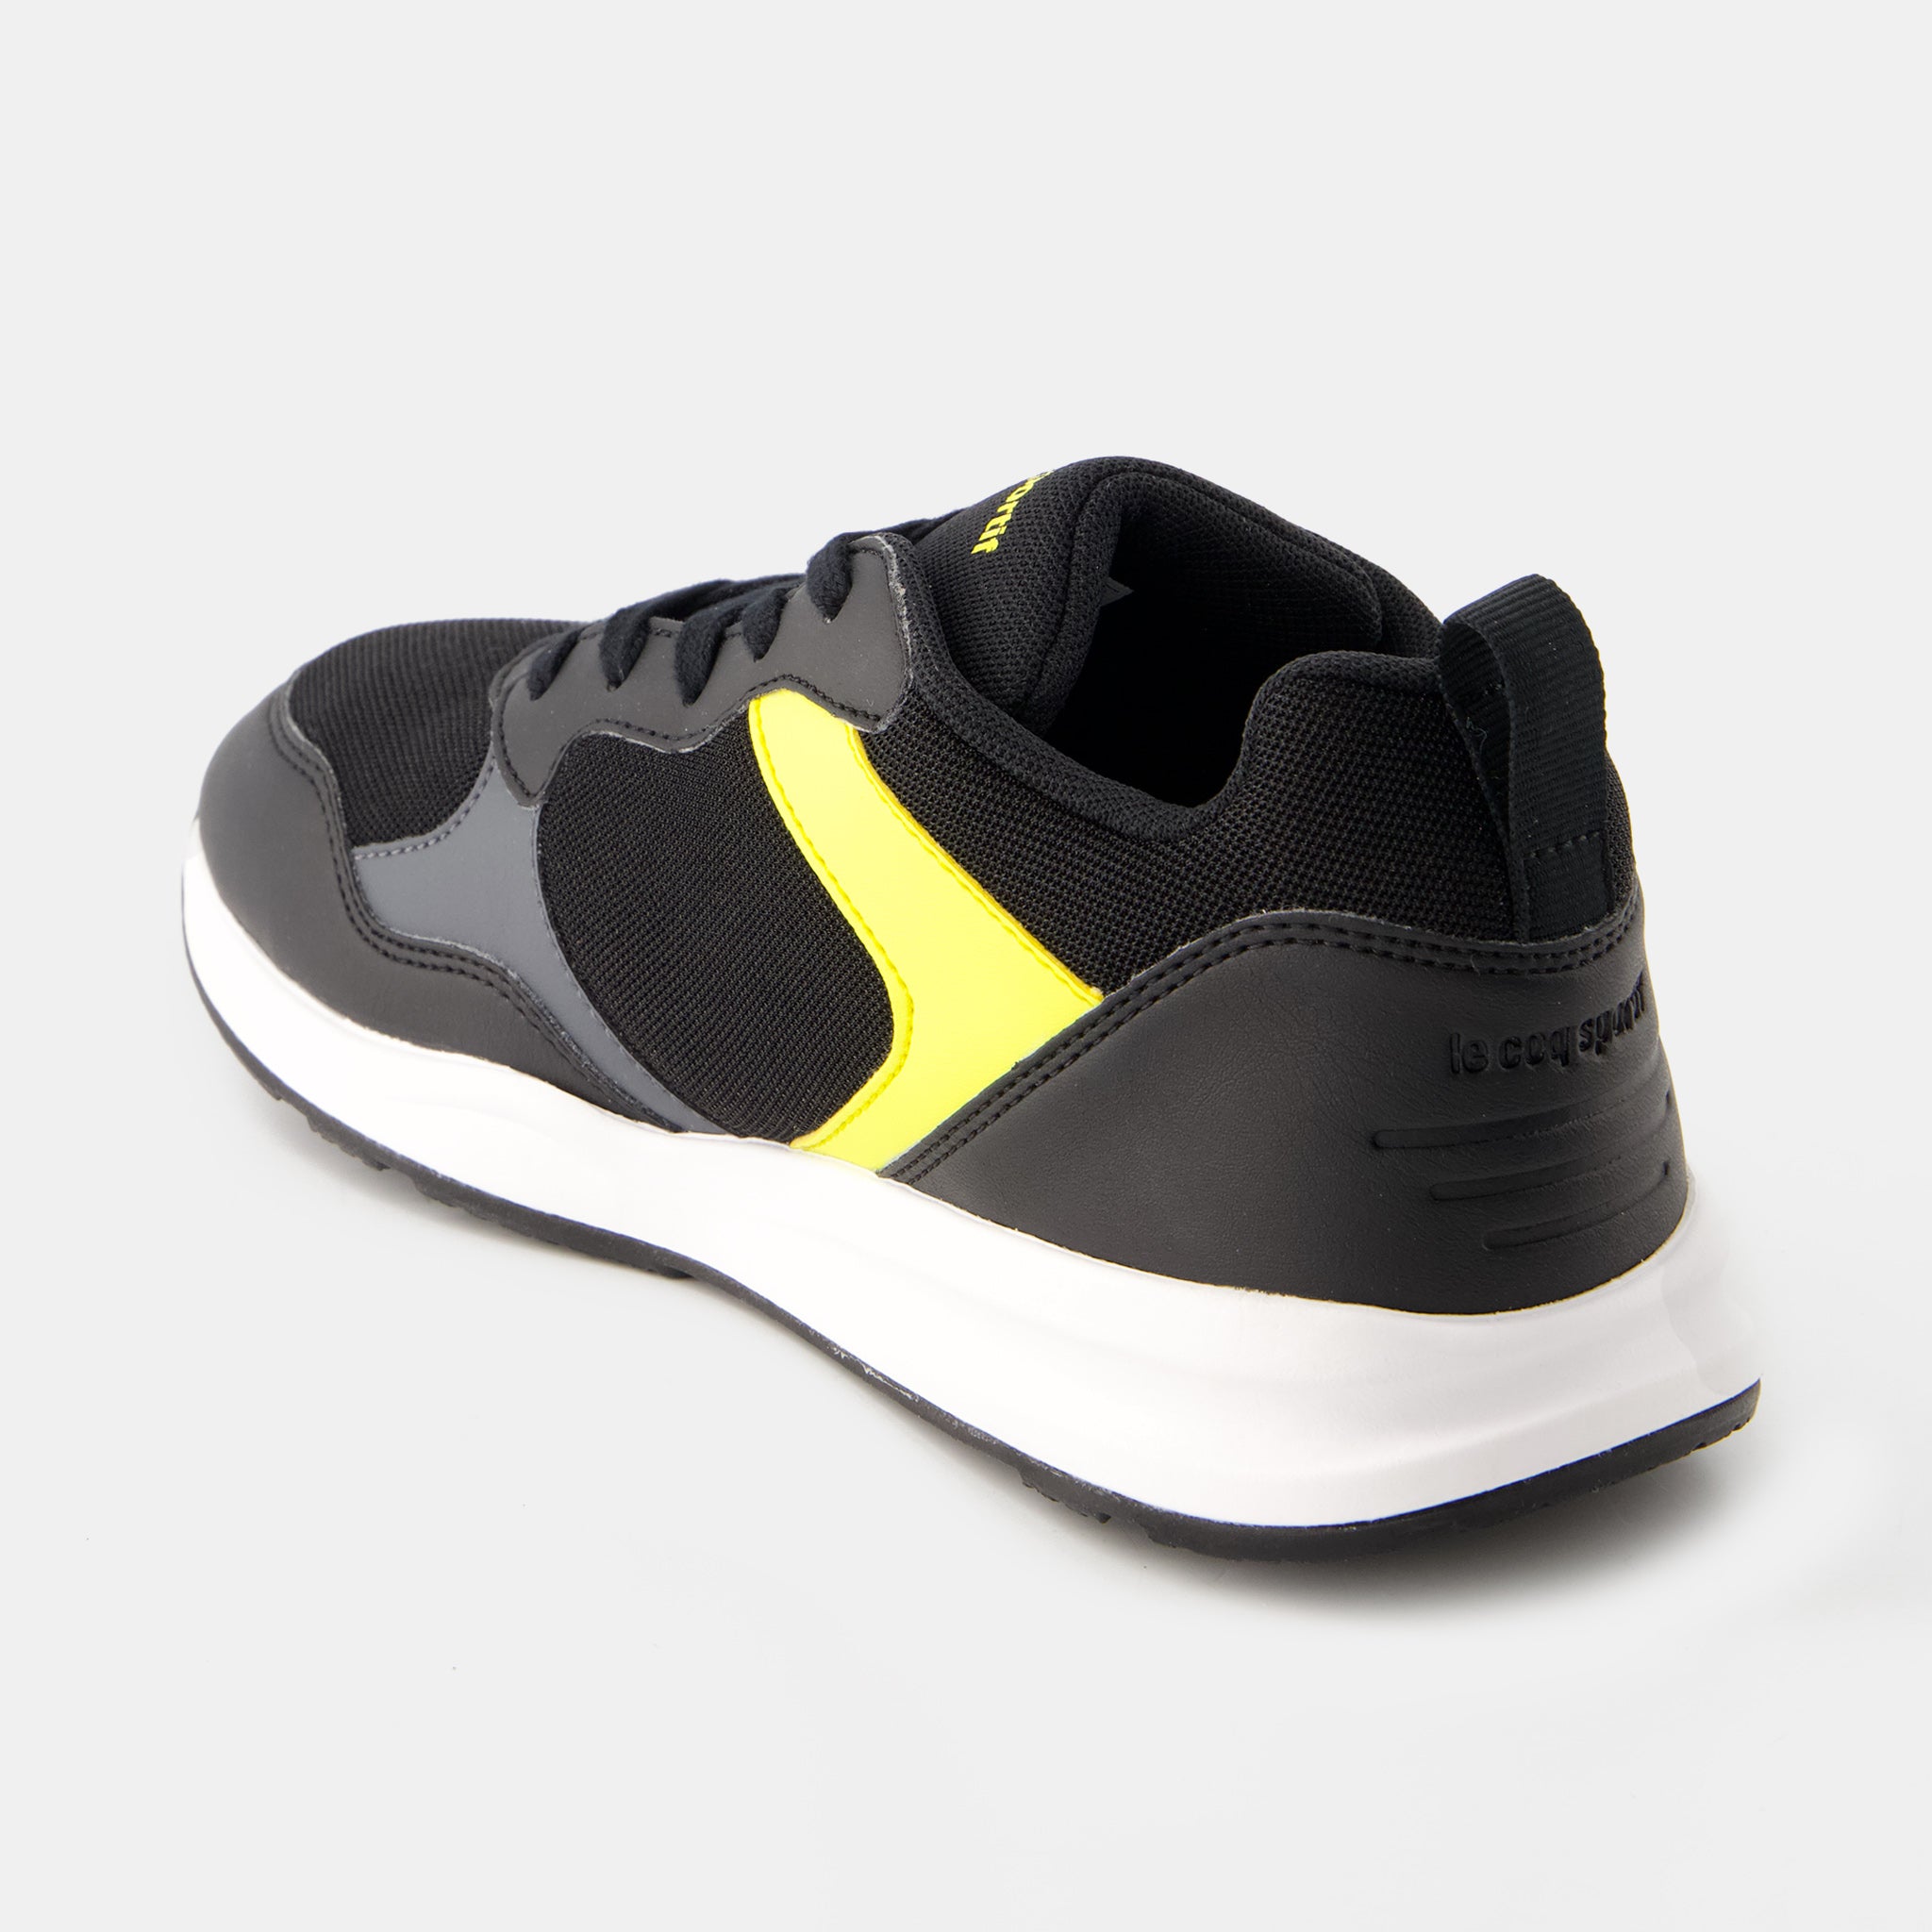 2410734-R500 GS black/ blazing yellow | Chaussures R500 Pré-ado